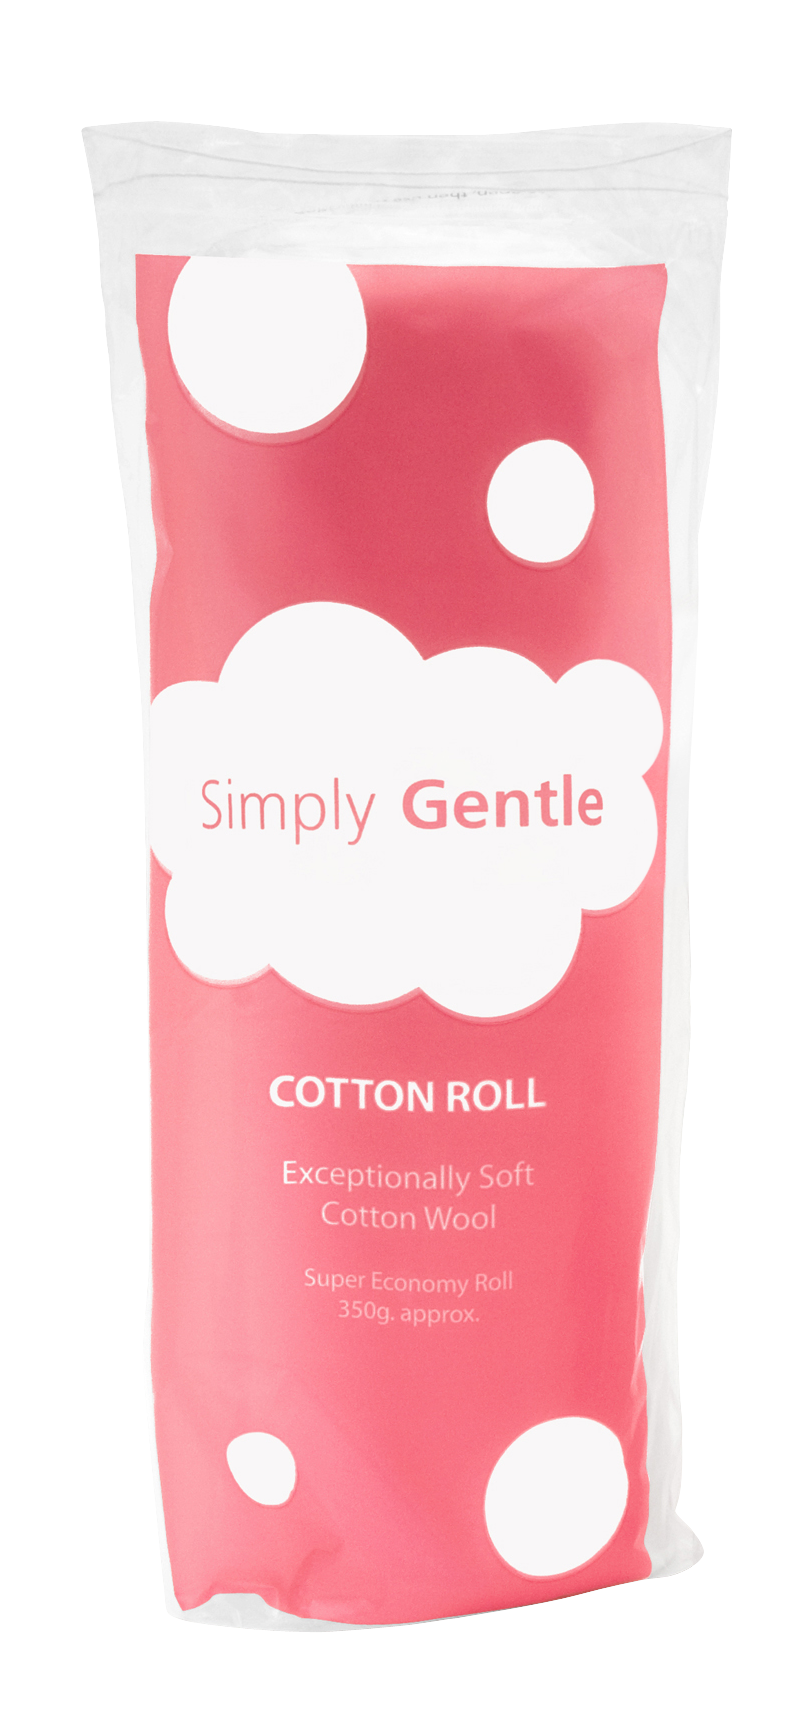 Simply Gentle Organic Cotton Roll 350g